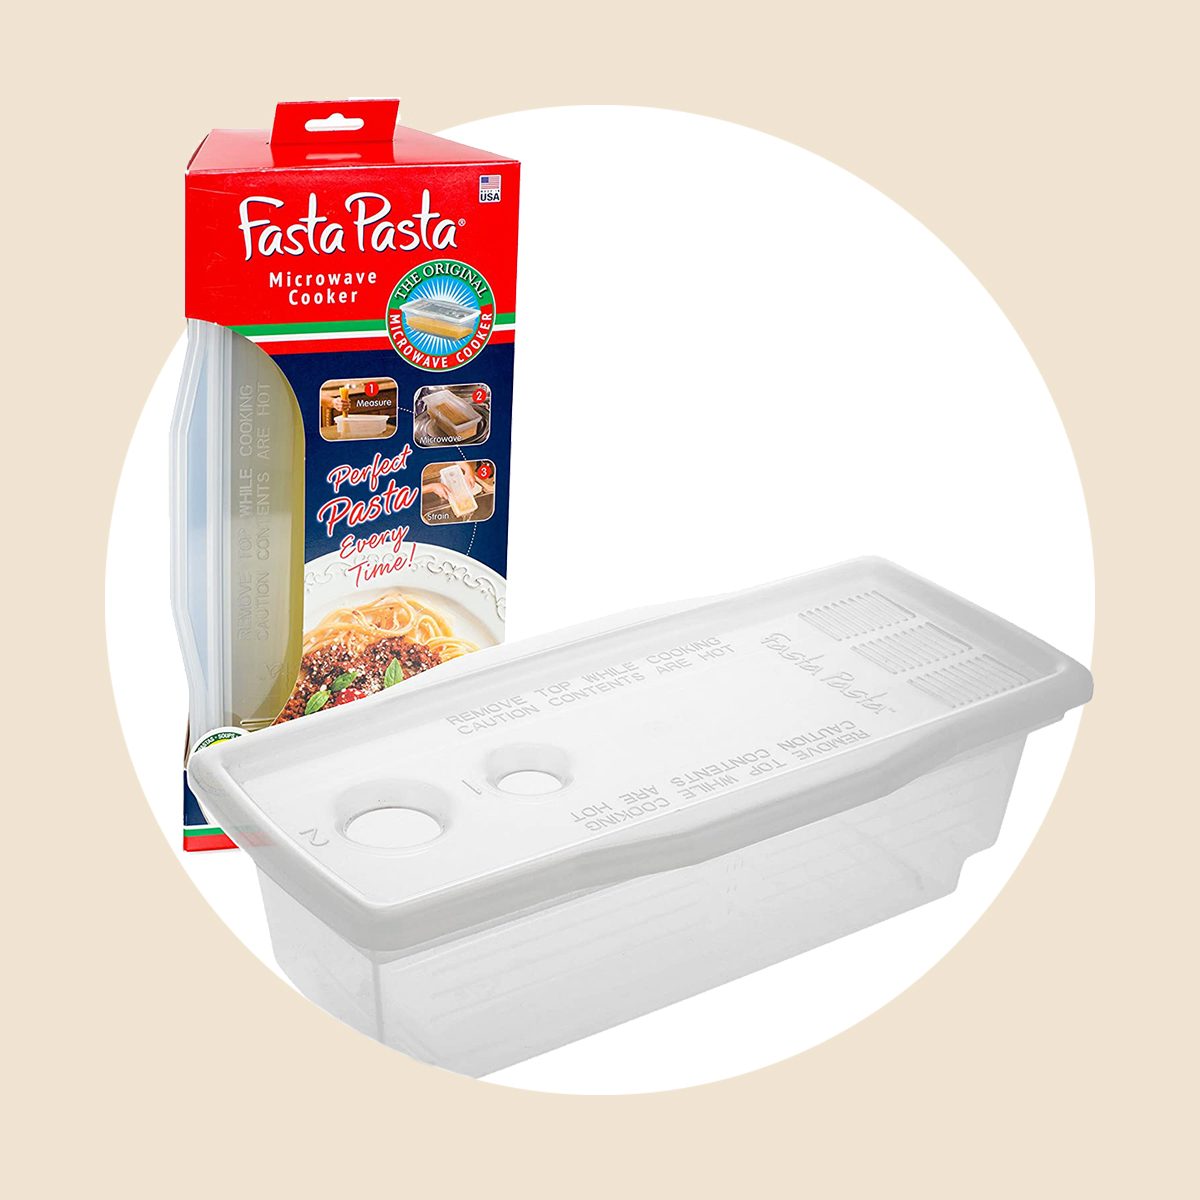 https://www.tasteofhome.com/wp-content/uploads/2019/05/fasta-pasta-microwave-pasta-maker-via-amazon.com-ecomm.jpg?fit=700%2C700